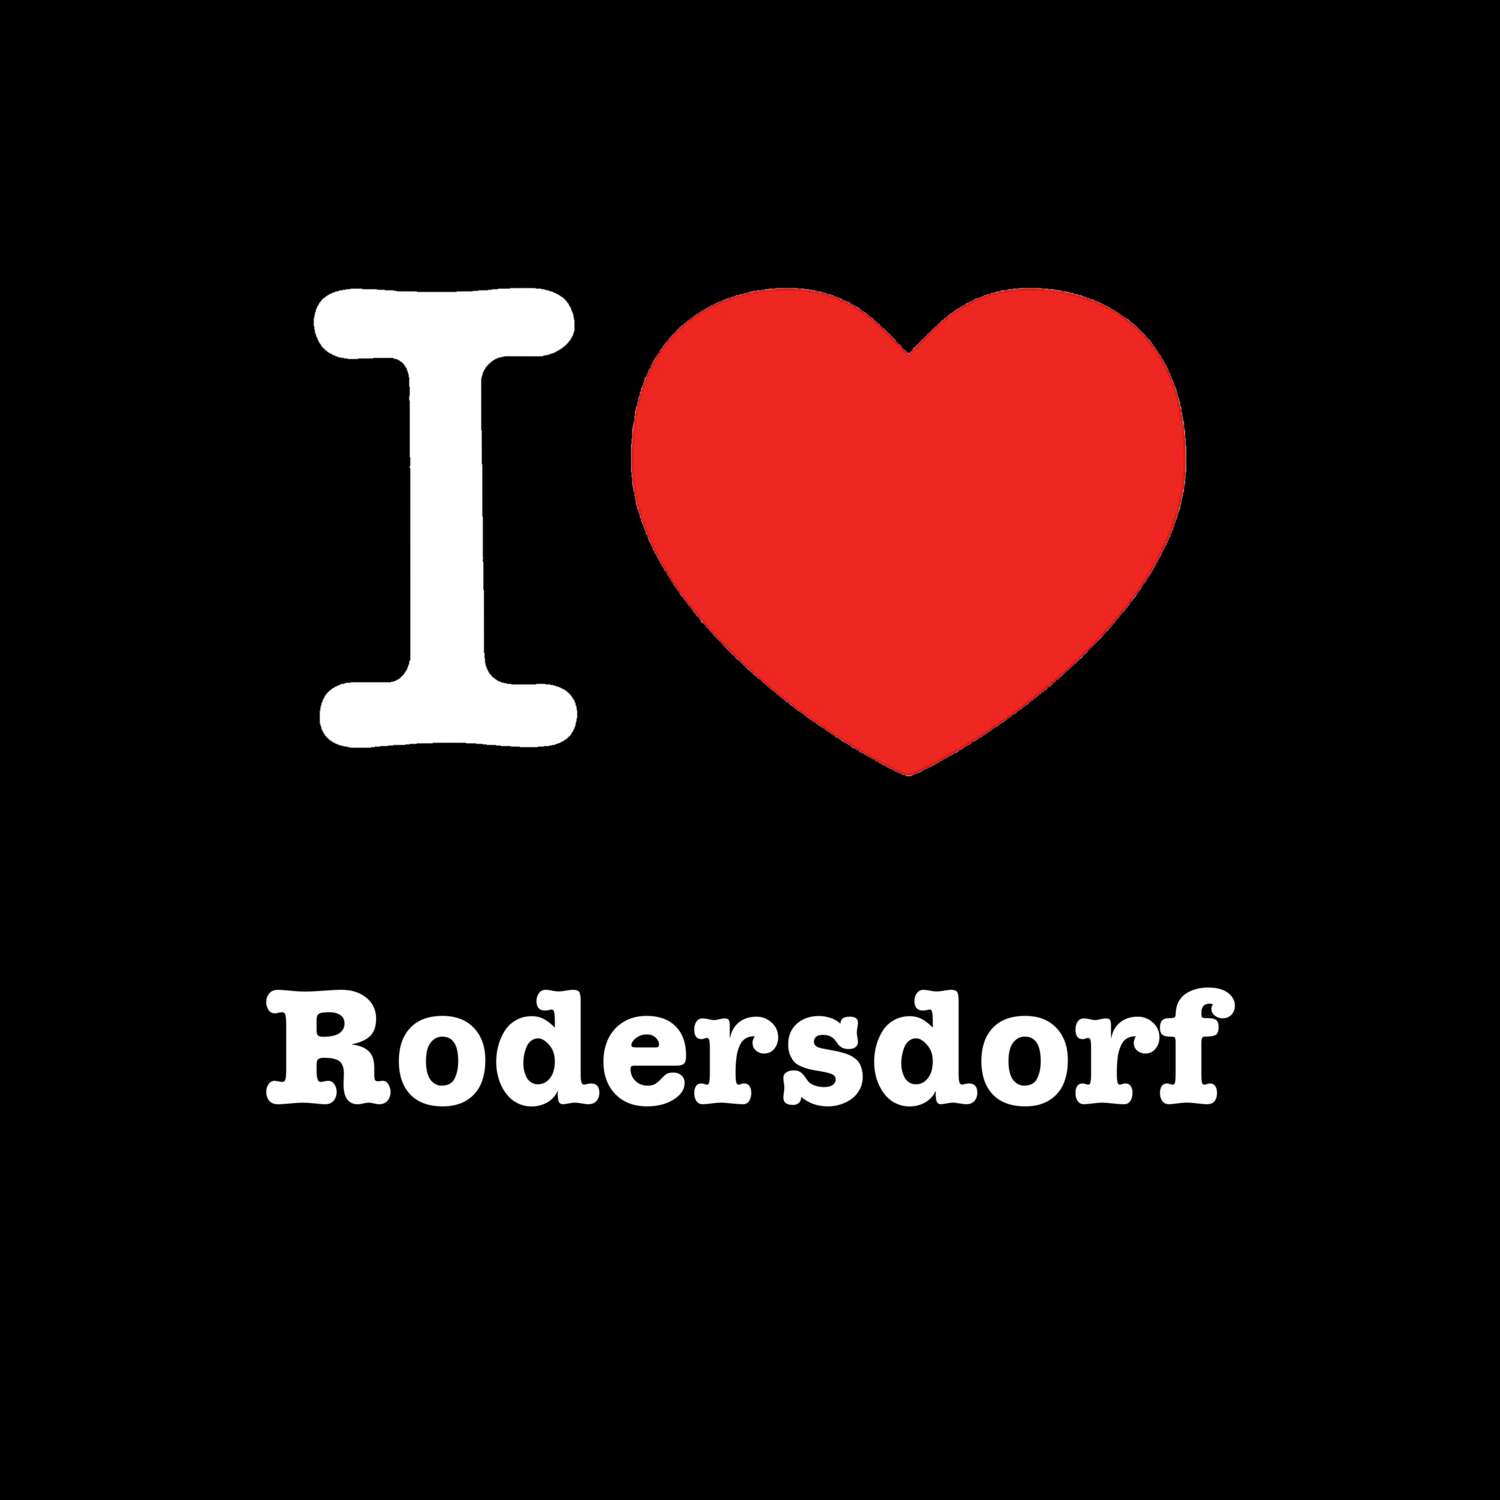 Rodersdorf T-Shirt »I love«